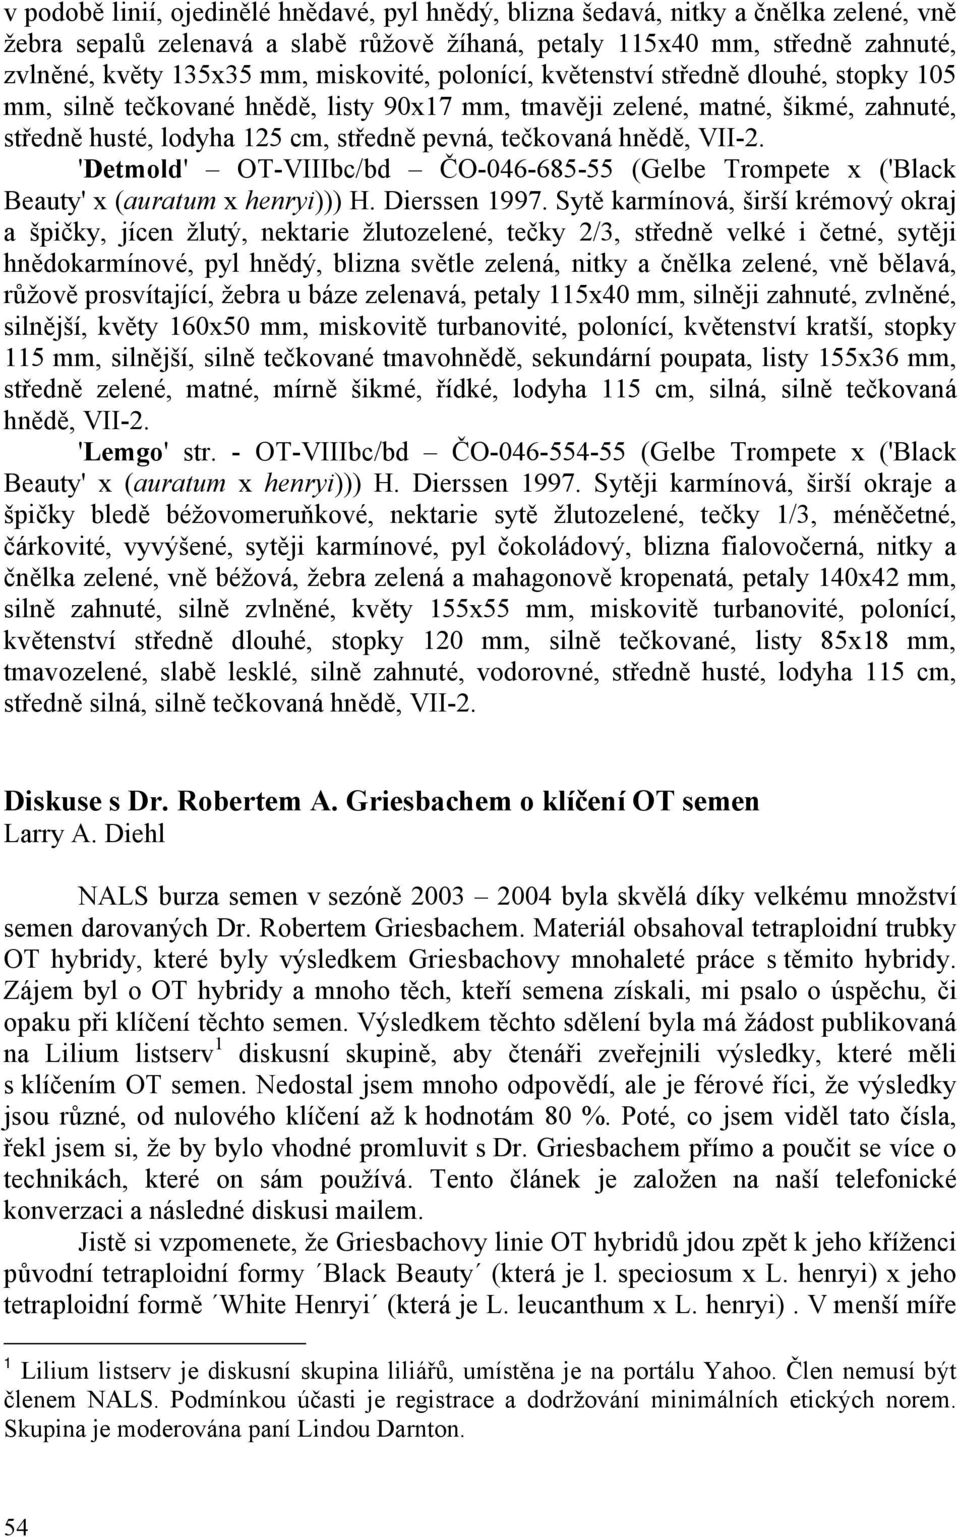 hnědě, VII-2. 'Detmold' OT-VIIIbc/bd ČO-046-685-55 (Gelbe Trompete x ('Black Beauty' x (auratum x henryi))) H. Dierssen 1997.